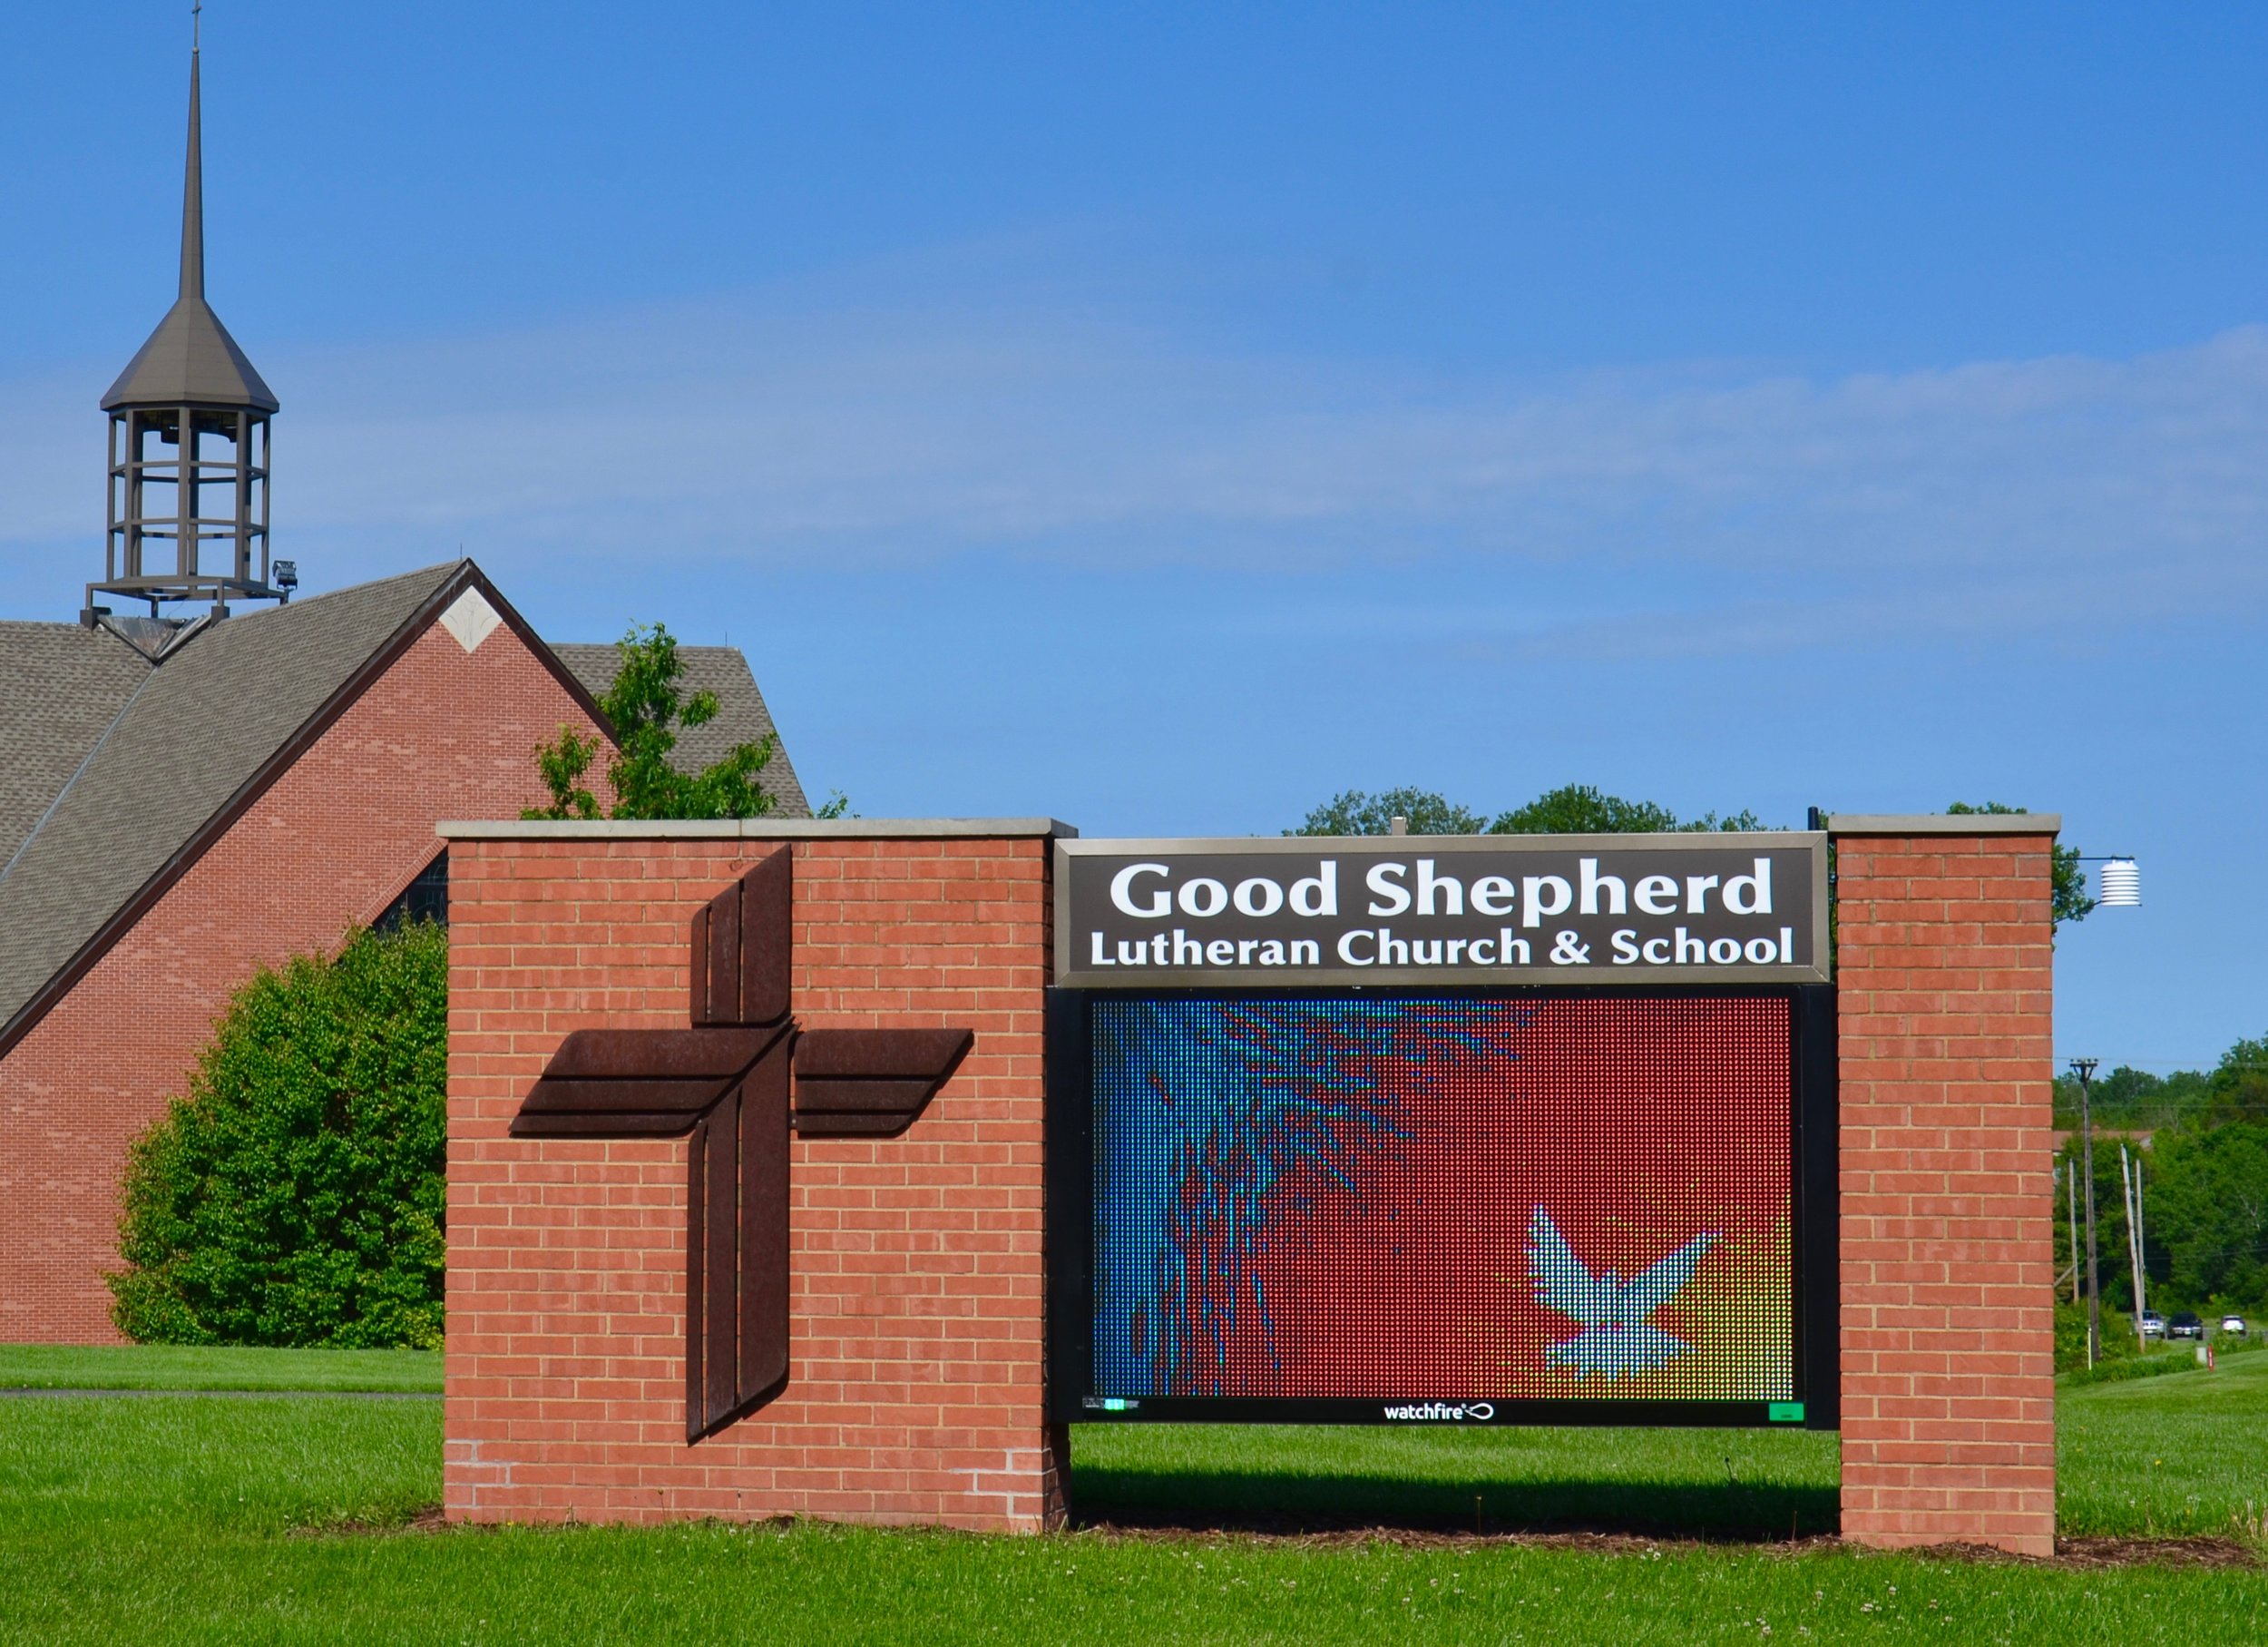 Good Shepherd Lutheran Church Exterior (Copy)